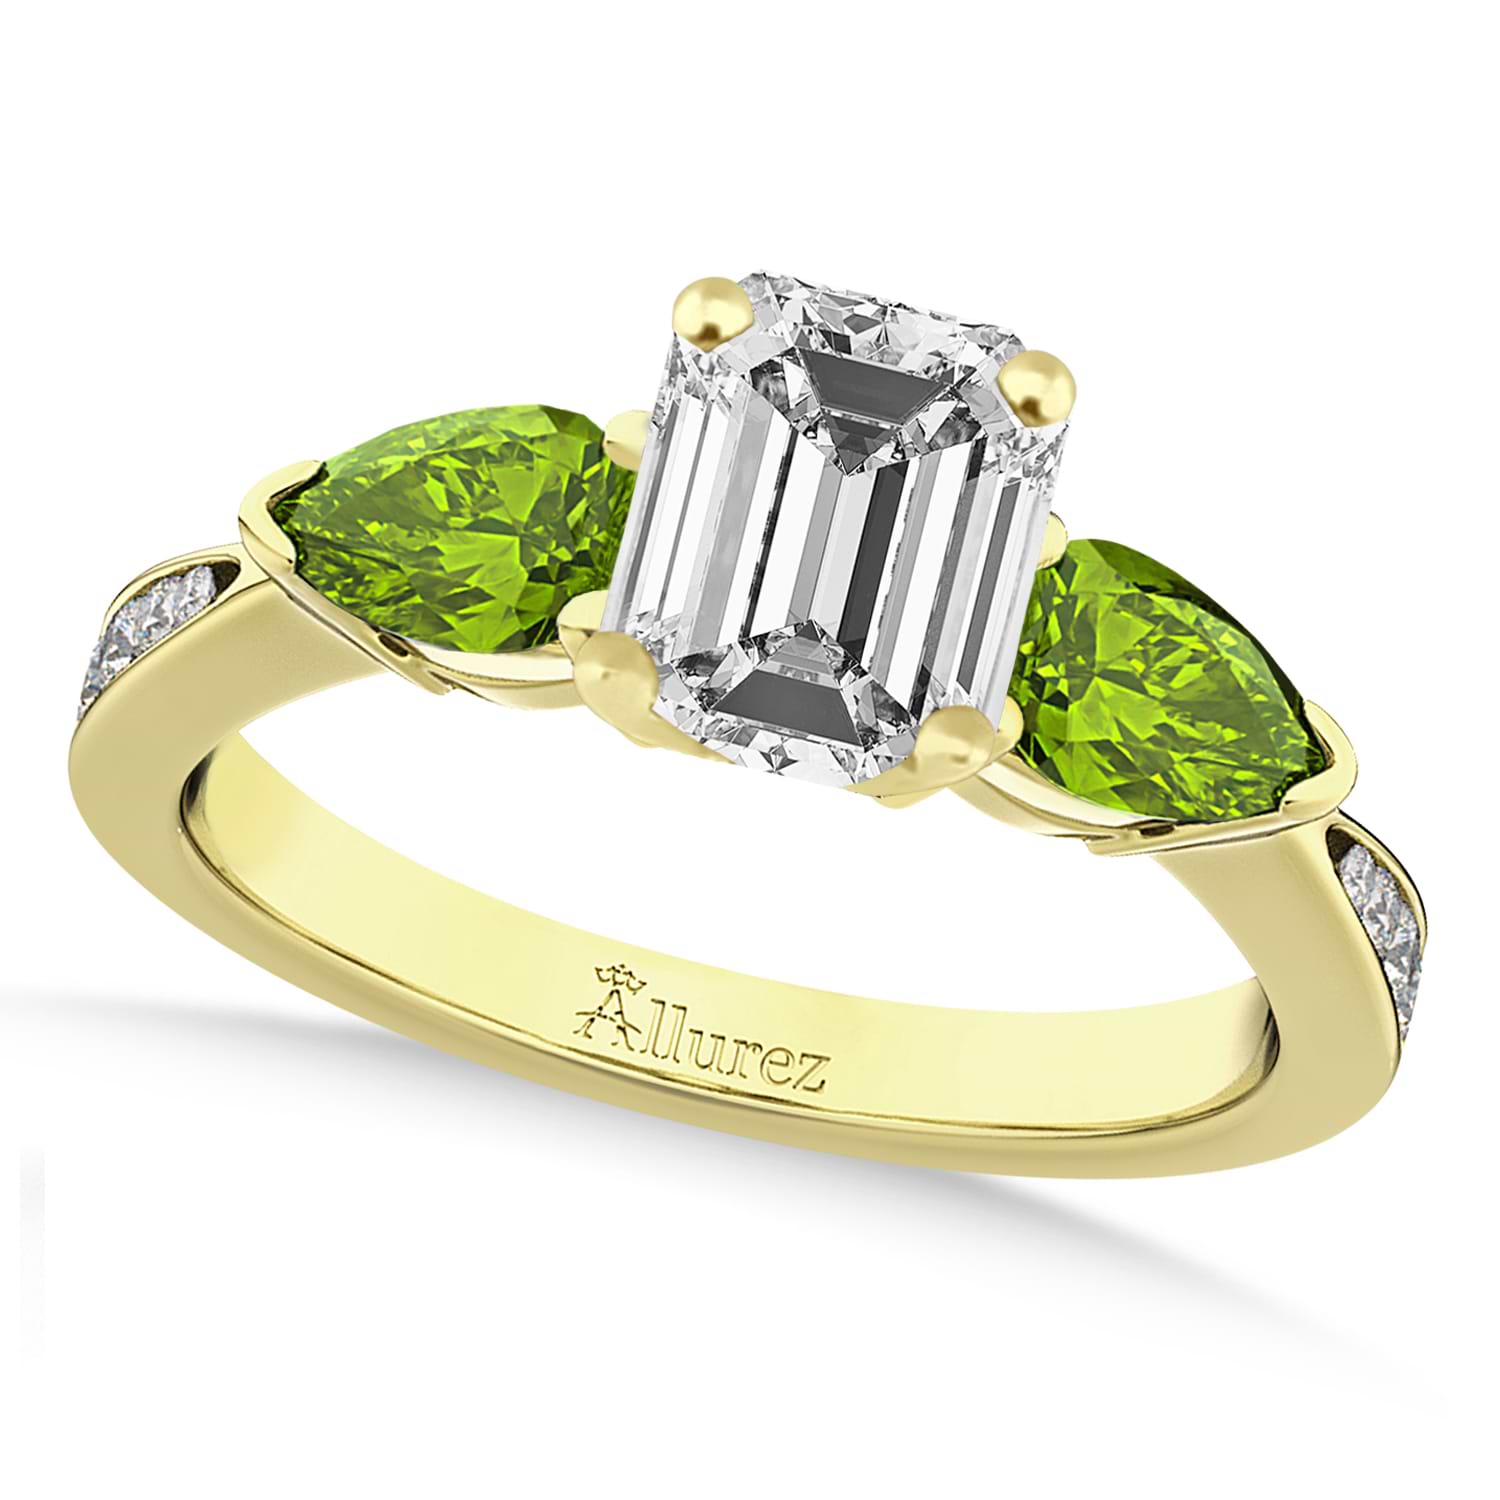 Emerald Diamond & Pear Peridot Engagement Ring 18k Yellow Gold (1.79ct)